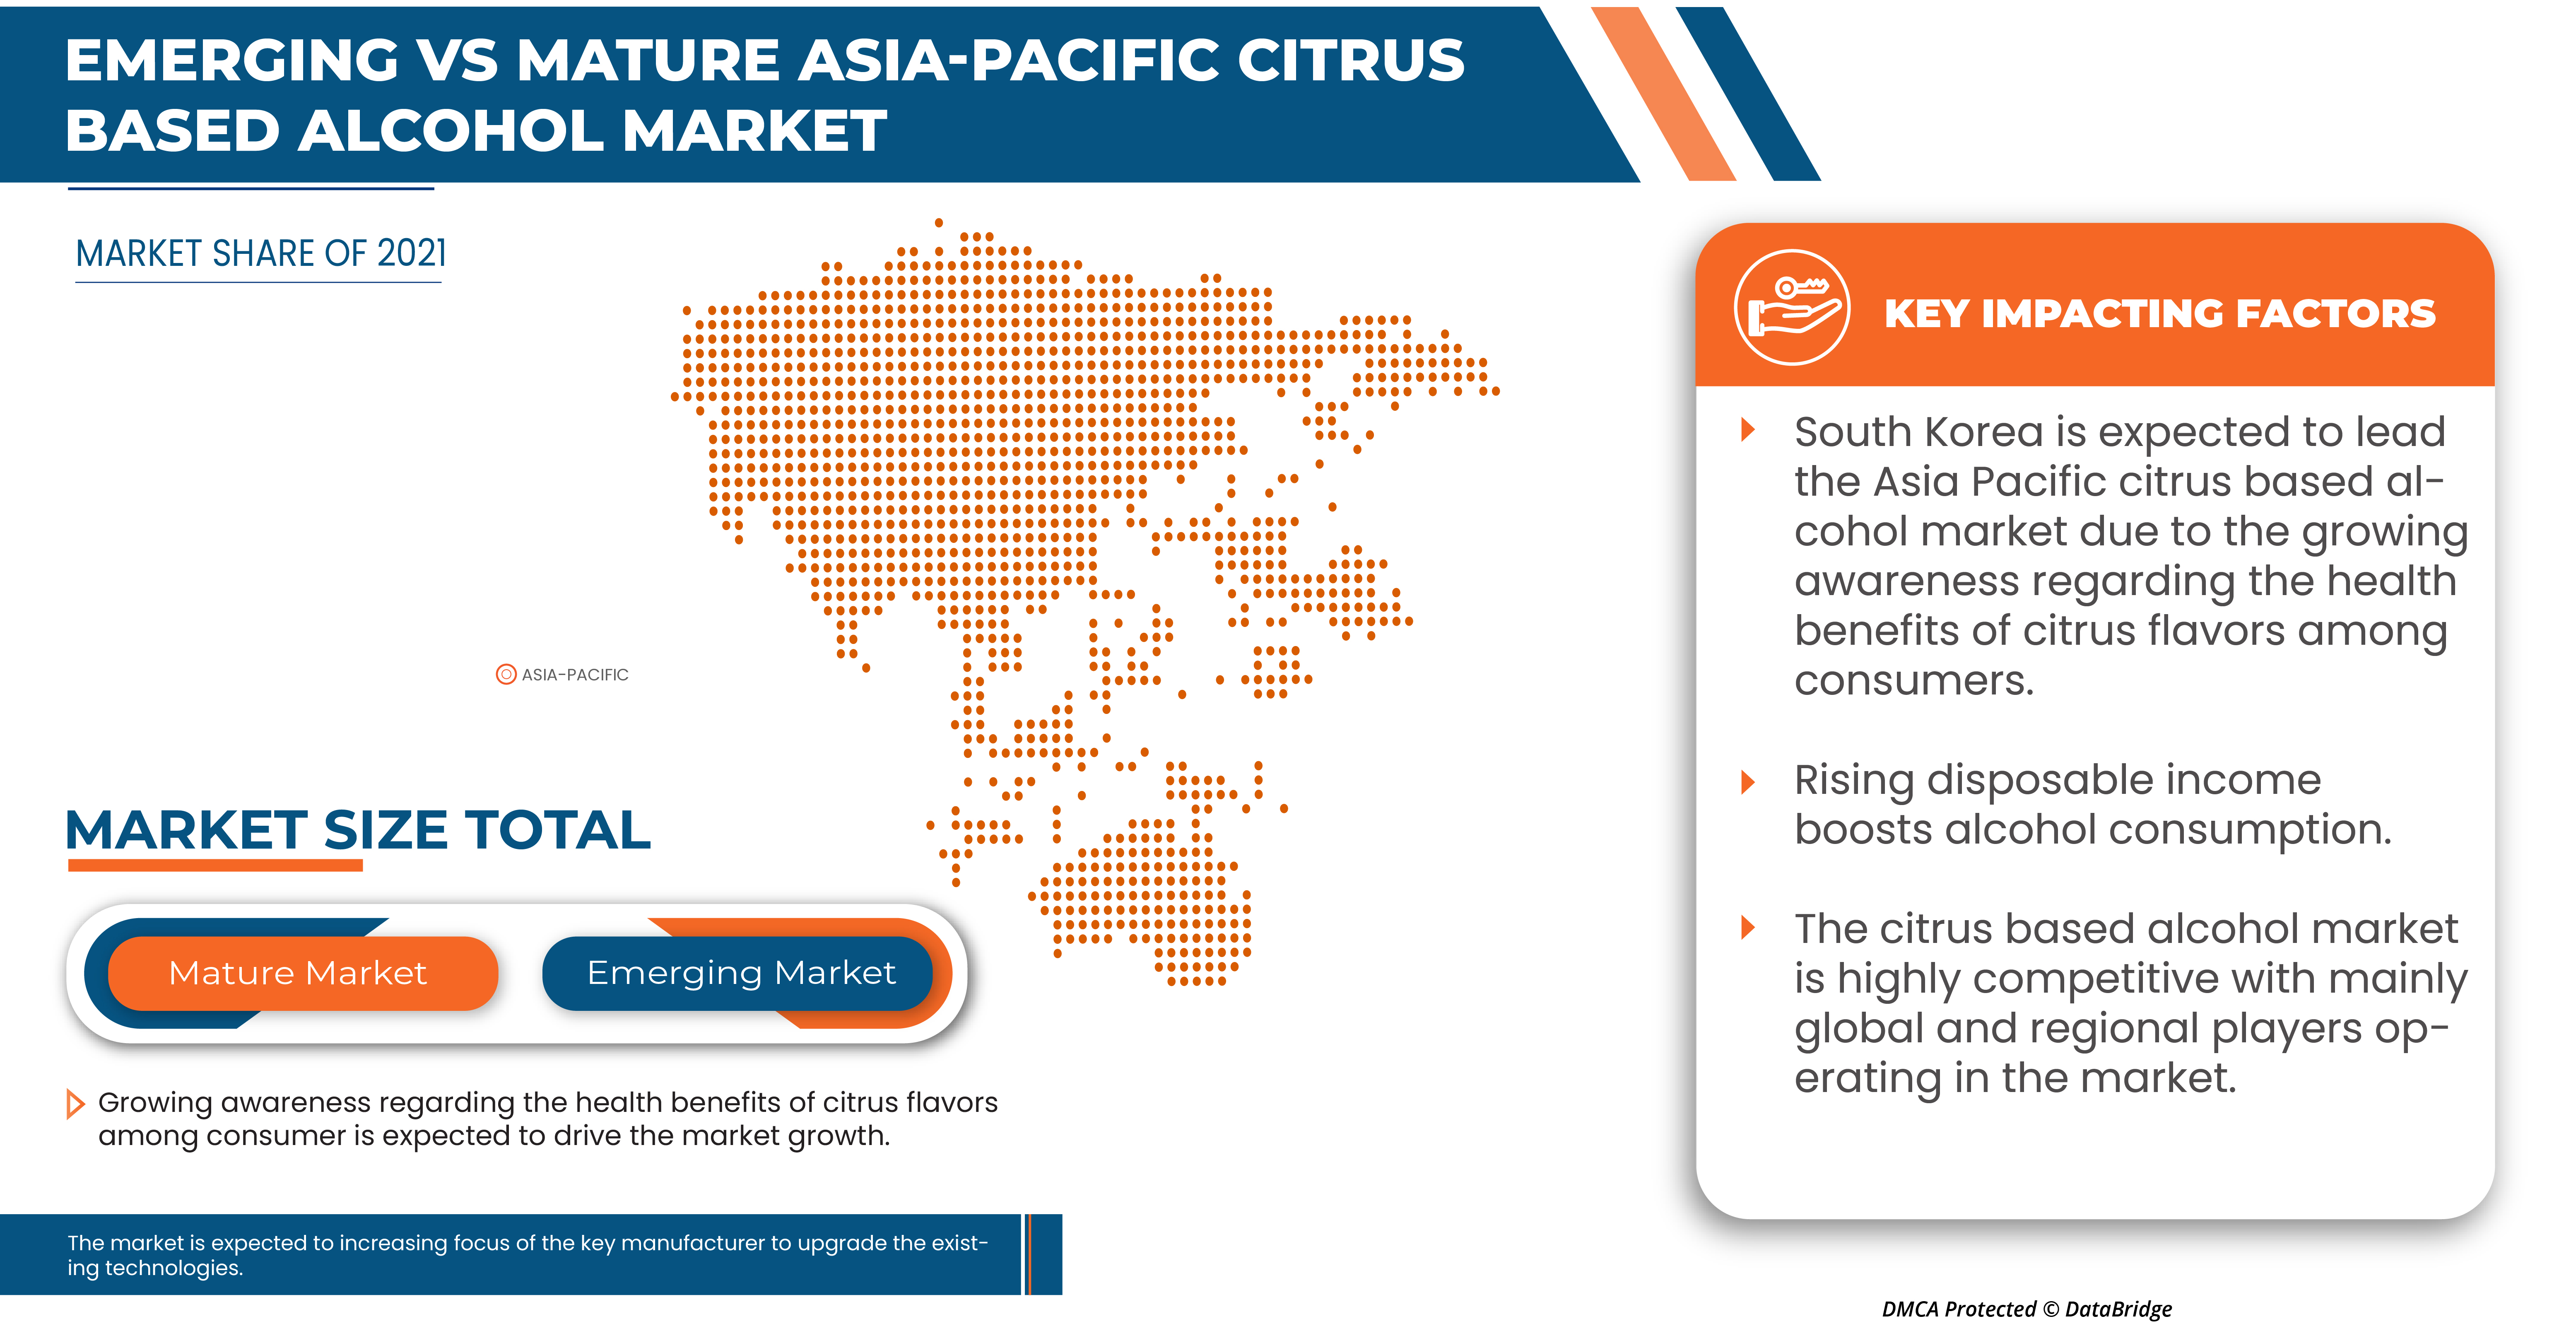 Asia-Pacific Citrus Based Alcohol Market